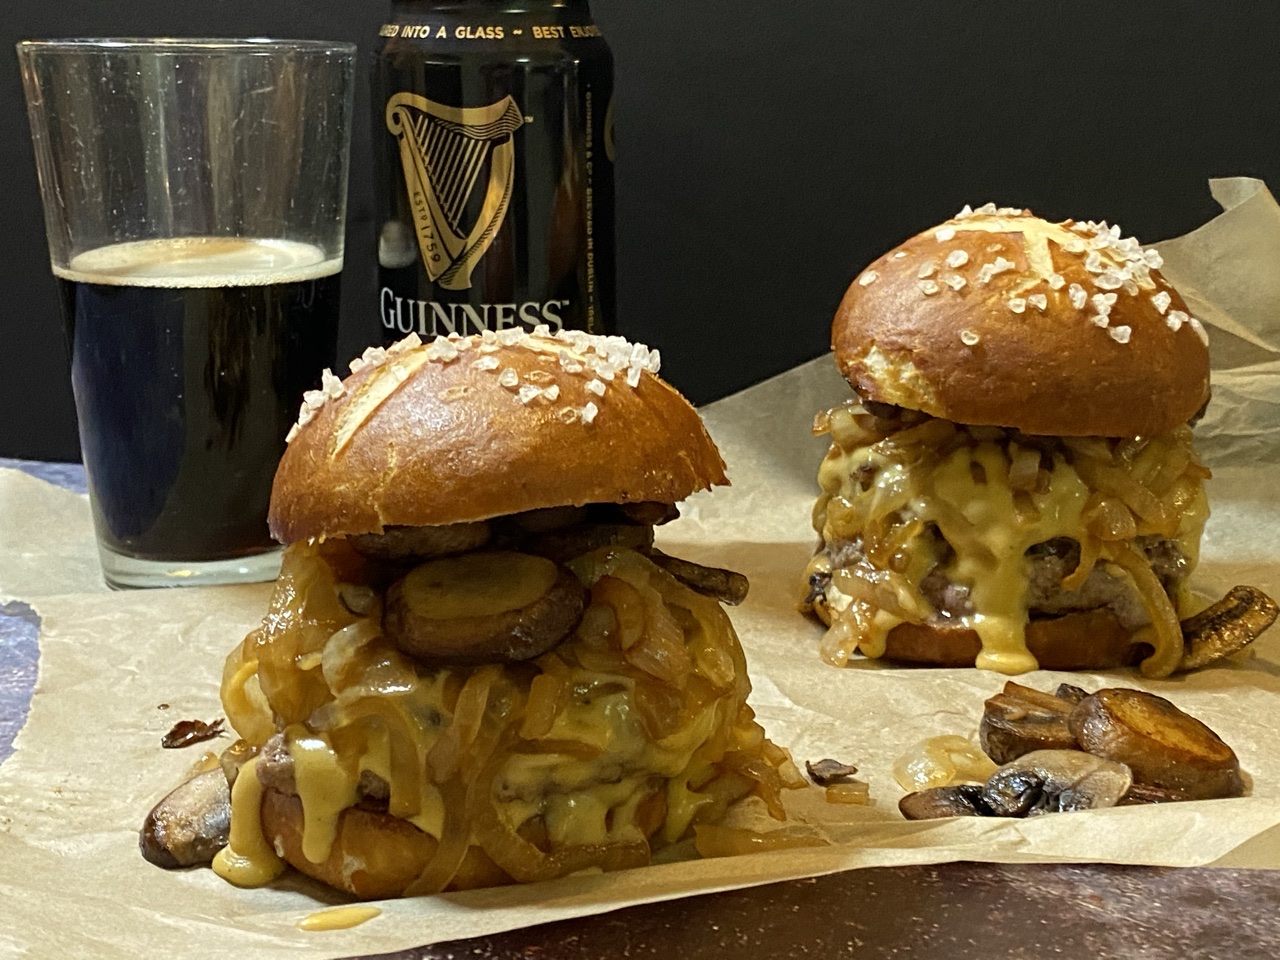 A151E315 1EBB 4565 A17E 2ABDEB21D10A - Guinness Blue Cheese Burgers with Guinness Cheddar & Caramelized Onions & Mushrooms